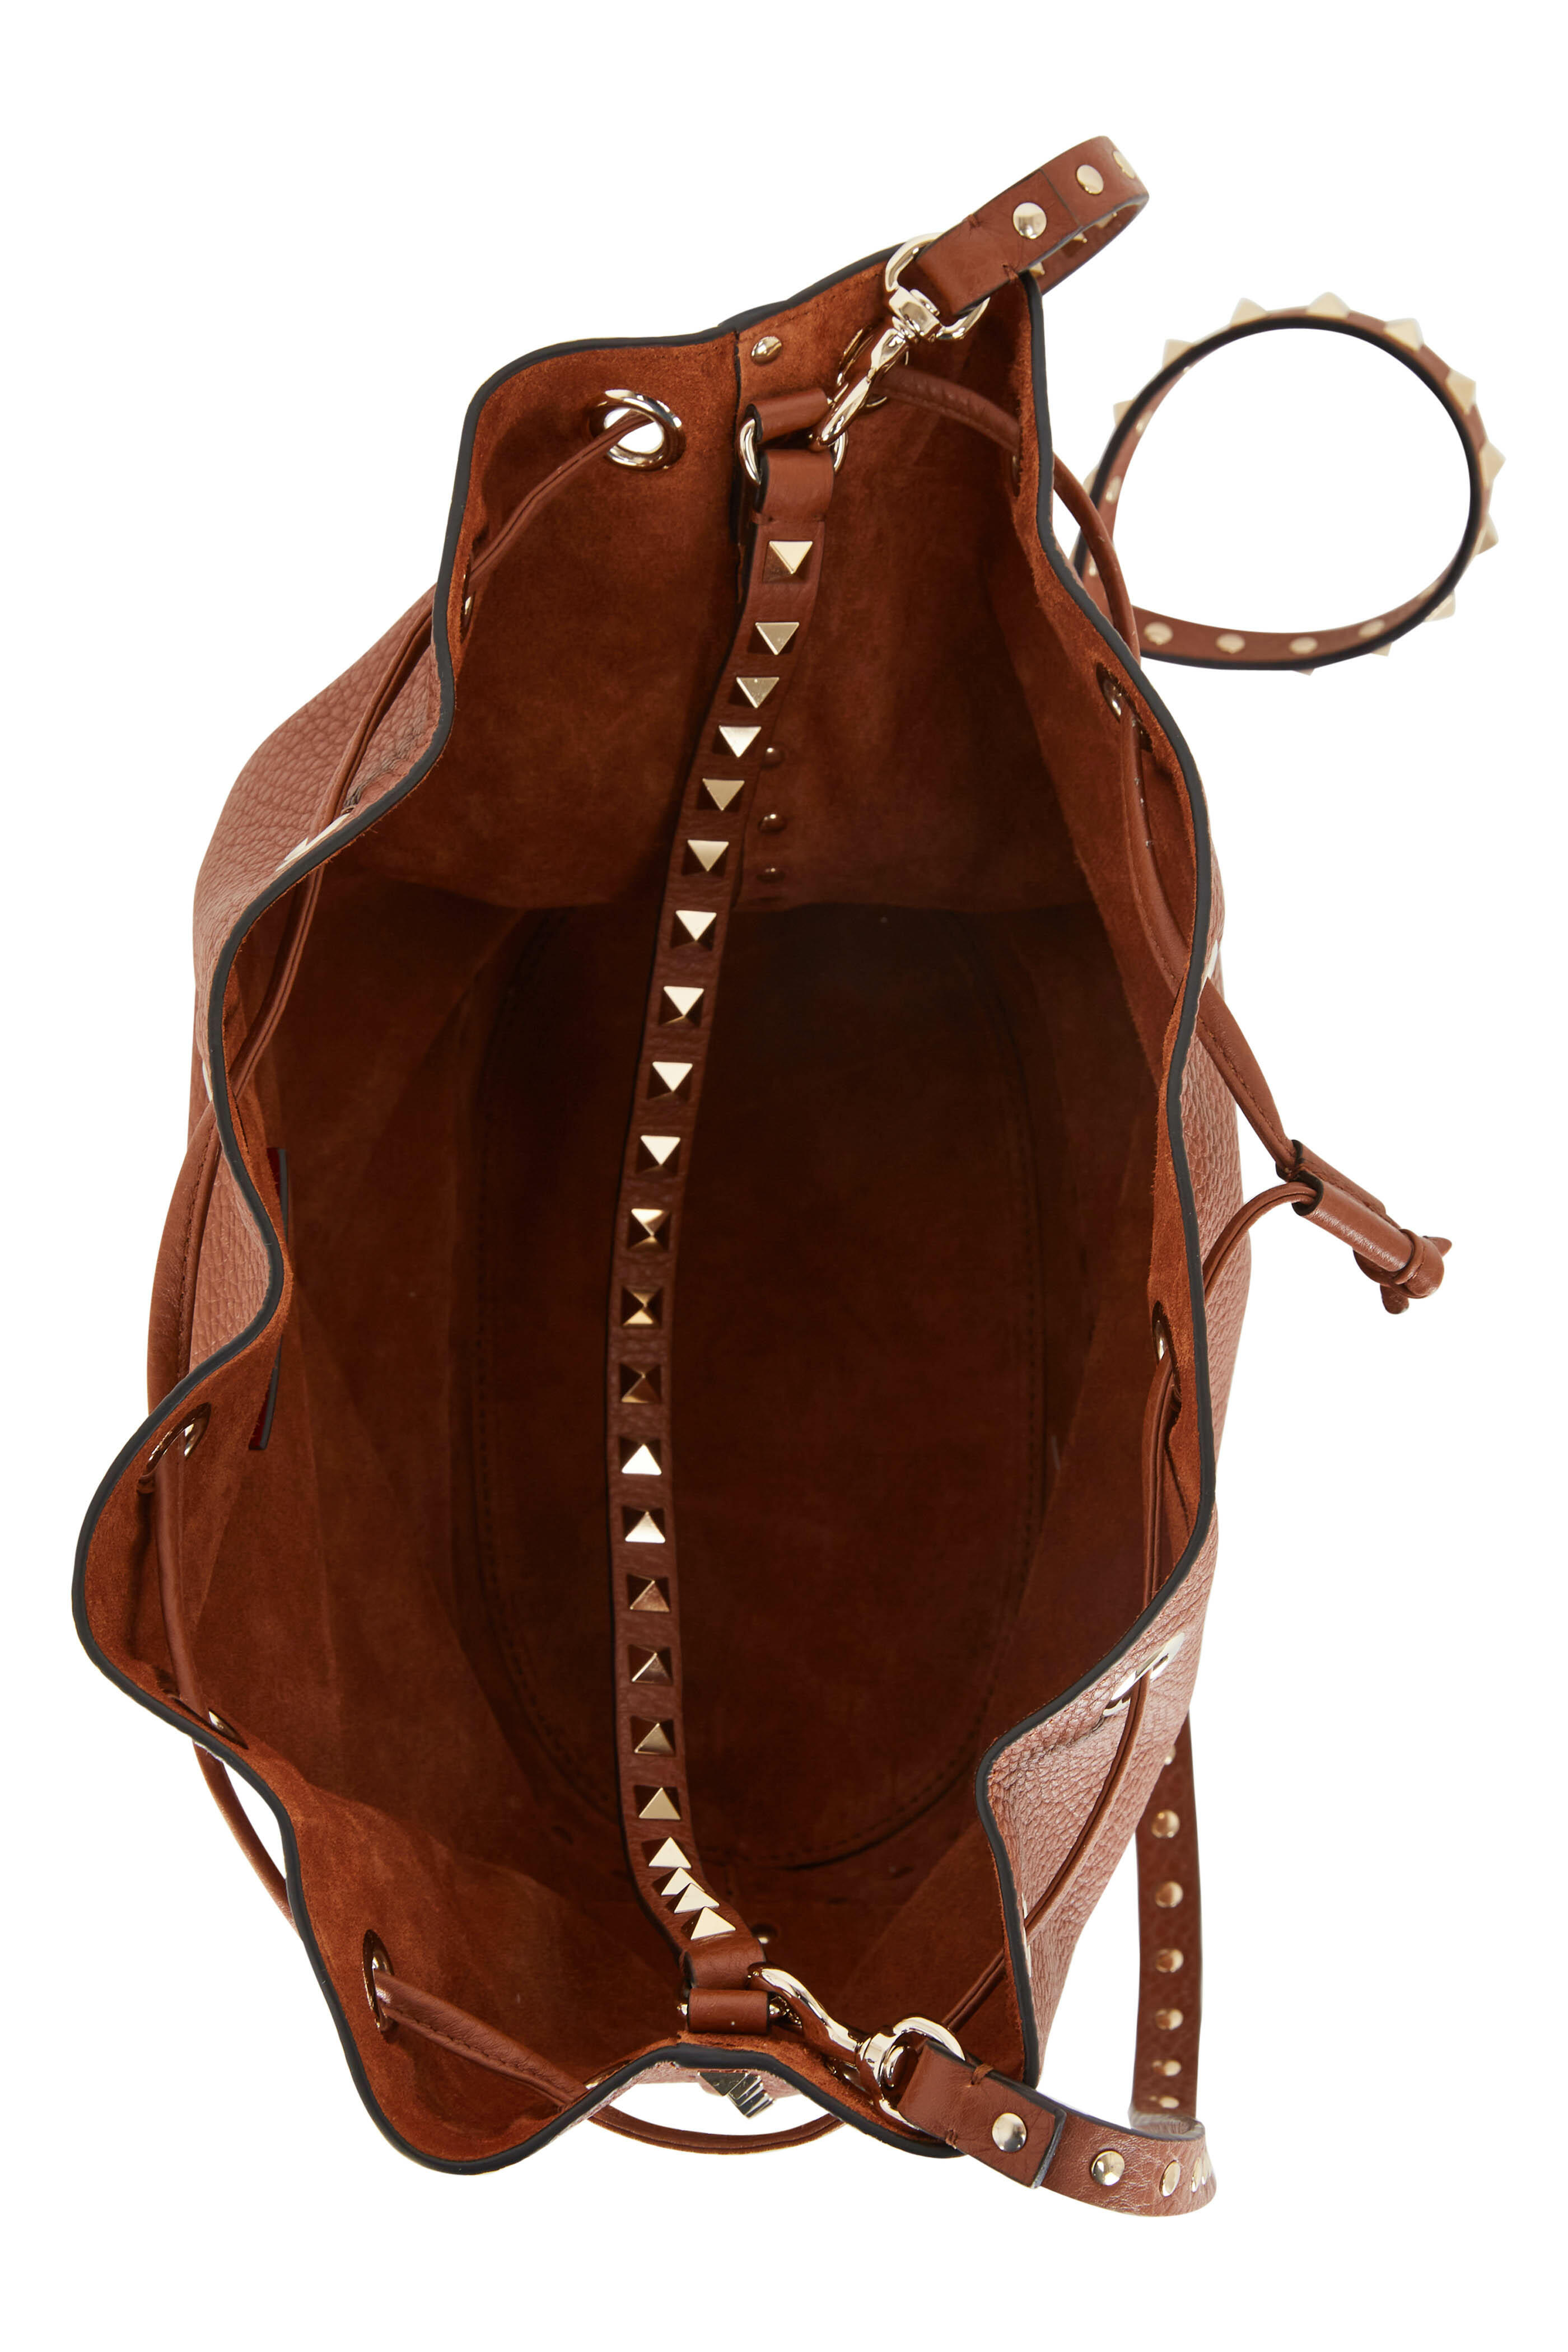 Valentino Rockstud Tote Leather Bag Camel Brown